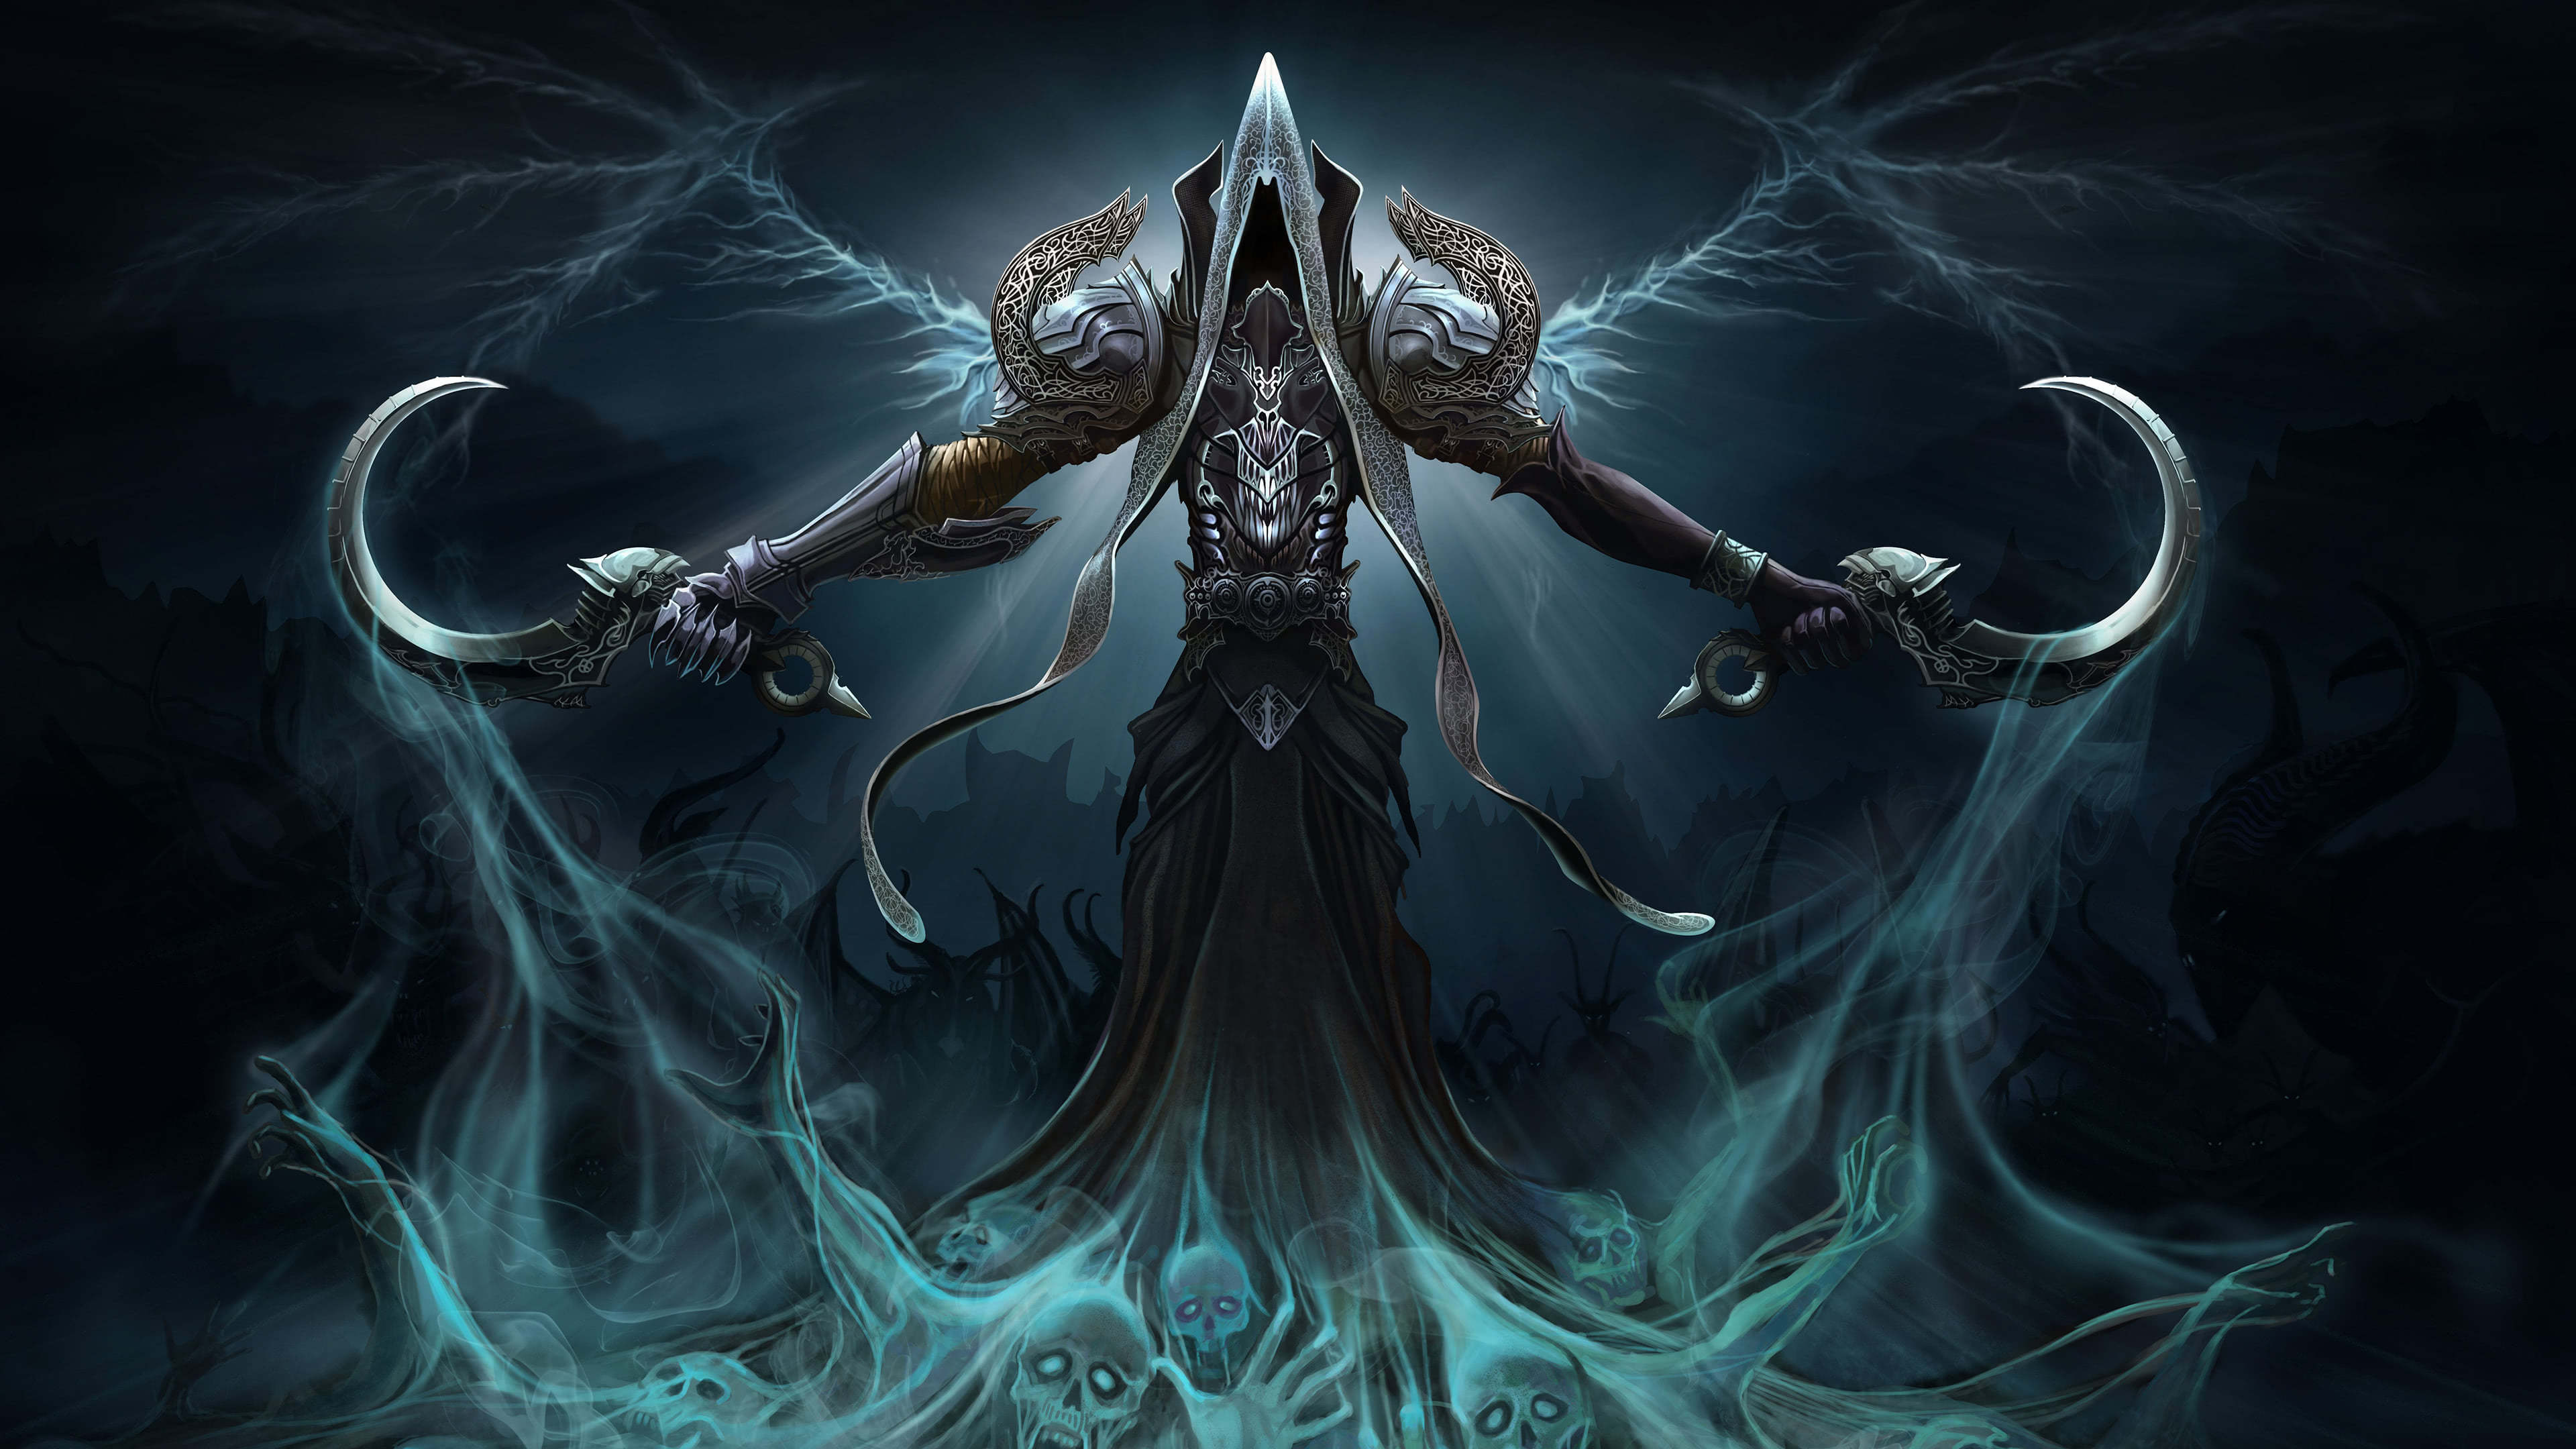 reaper of souls wallpaper,cg artwork,demon,darkness,mythology,fictional character